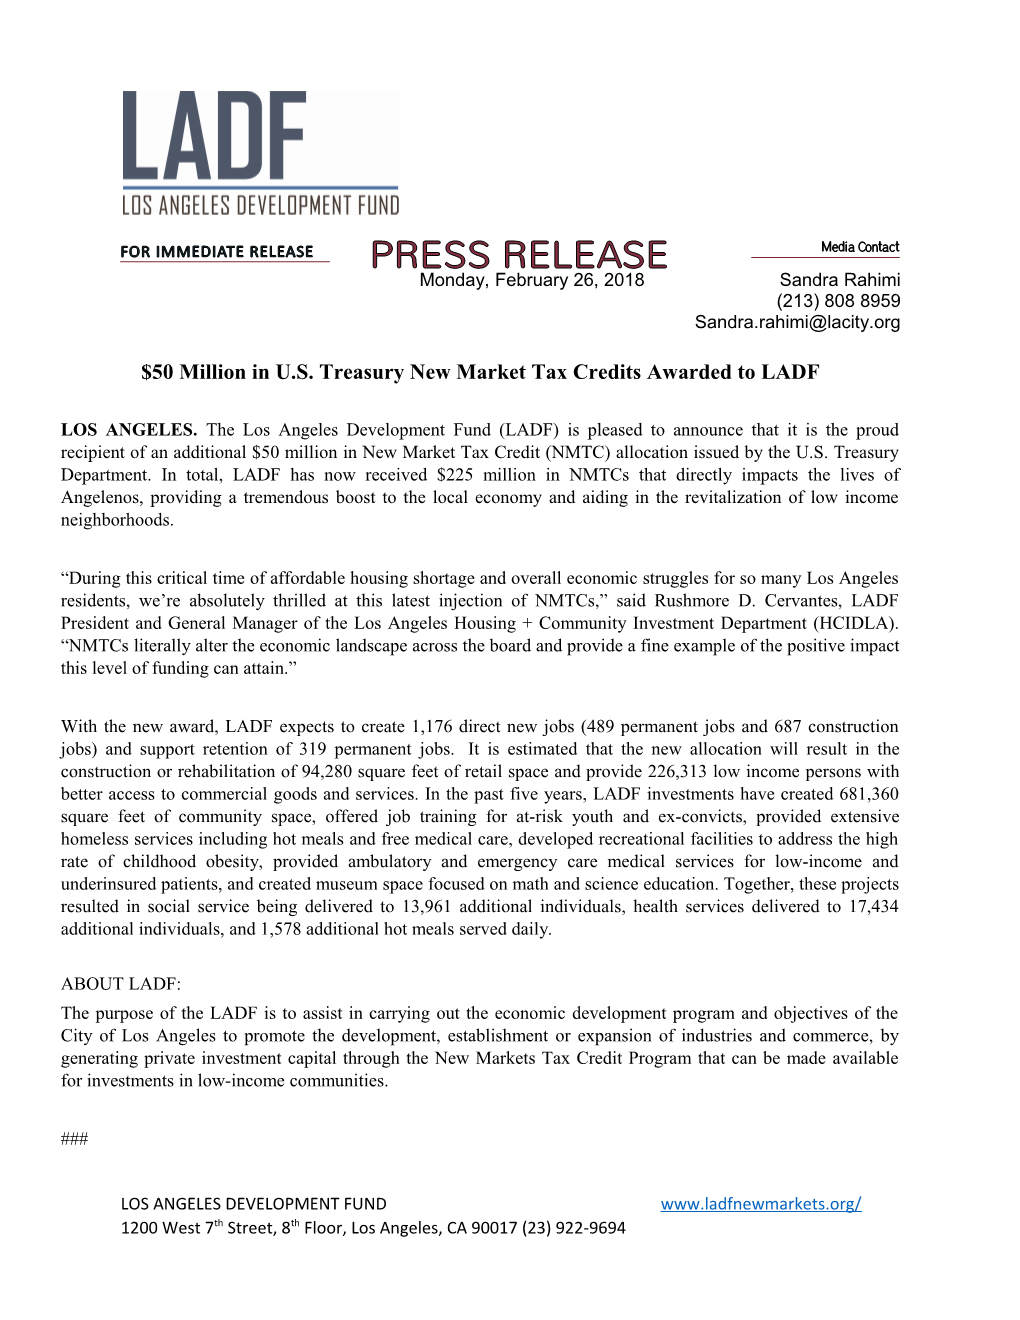 $50 Million in U.S. Treasury New Market Tax Credits Awarded to LADF